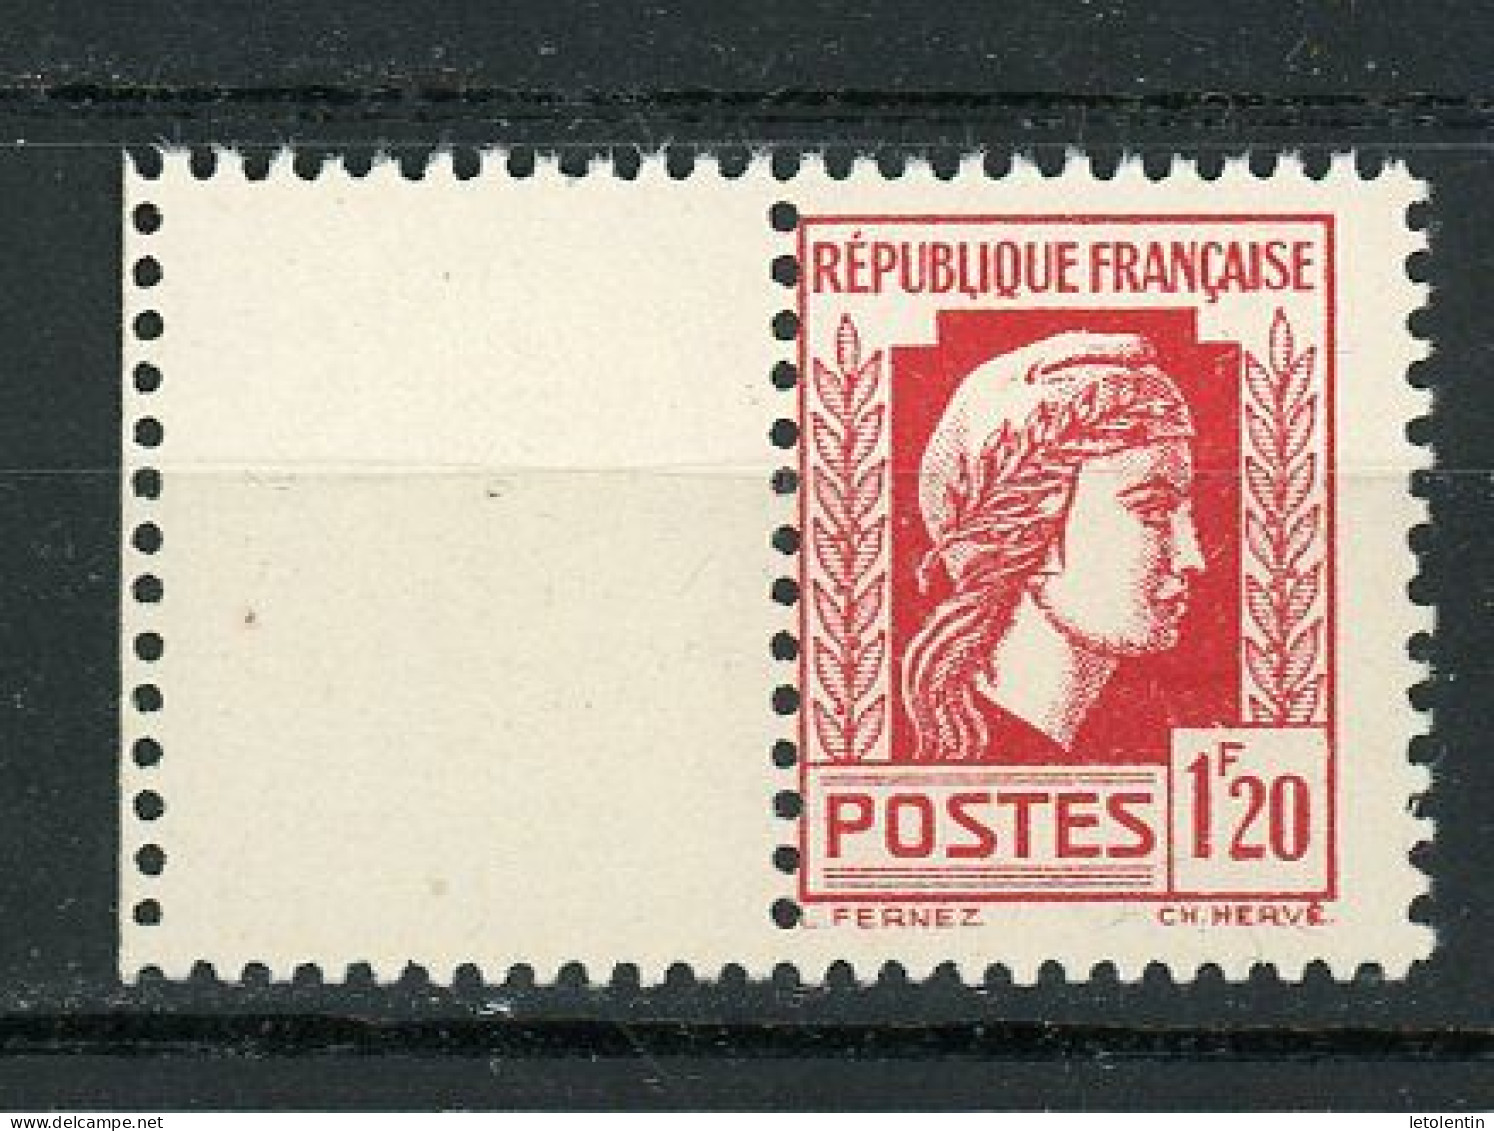 FRANCE - MARIANNE D'ALGER - N° Yvert 638** BORD DE FEUILLE - 1944 Coq Et Marianne D'Alger